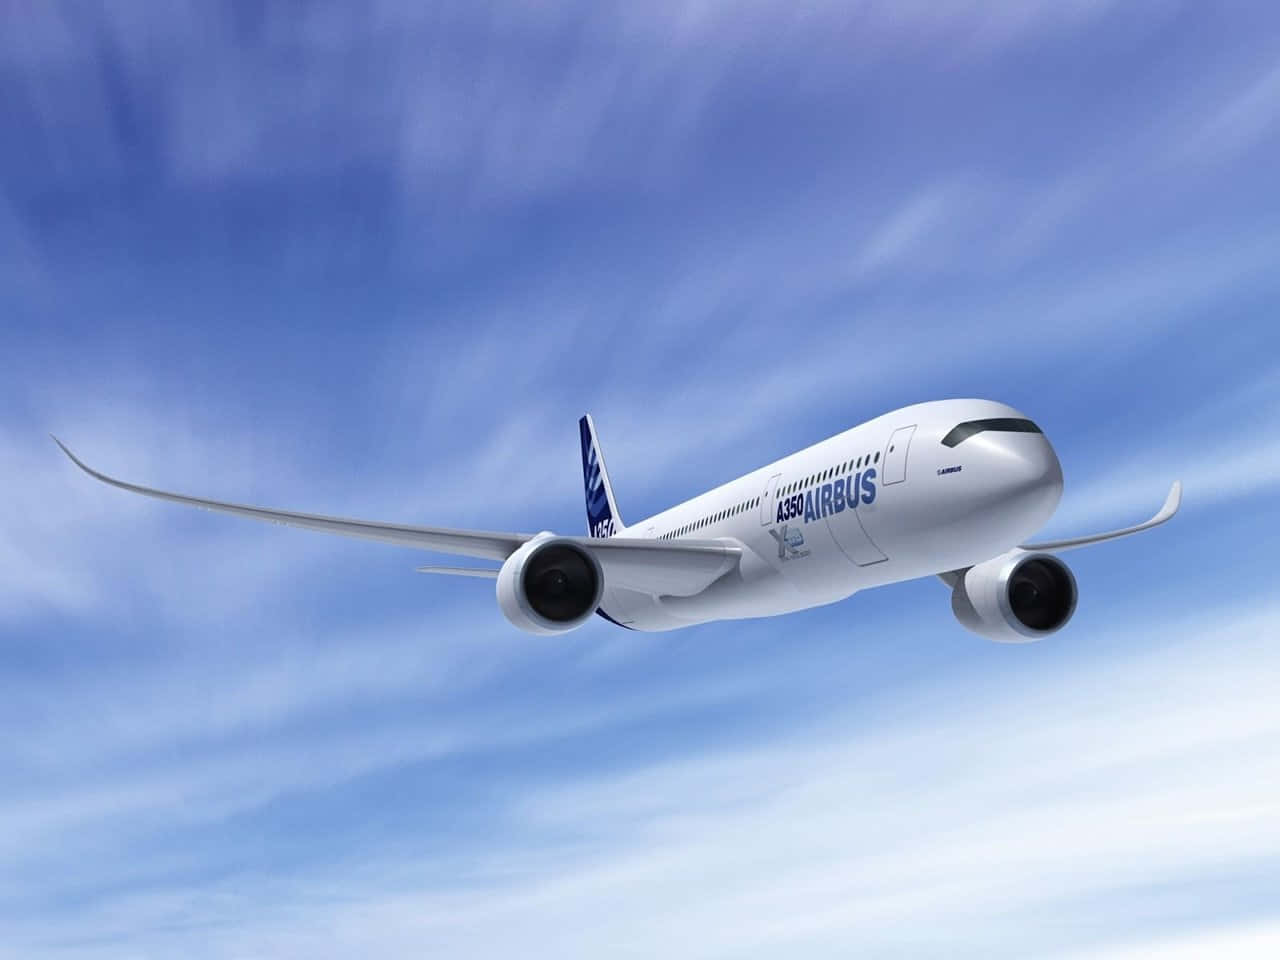 Bestesflugzeug-hintergrundbild Airbus-flugzeug